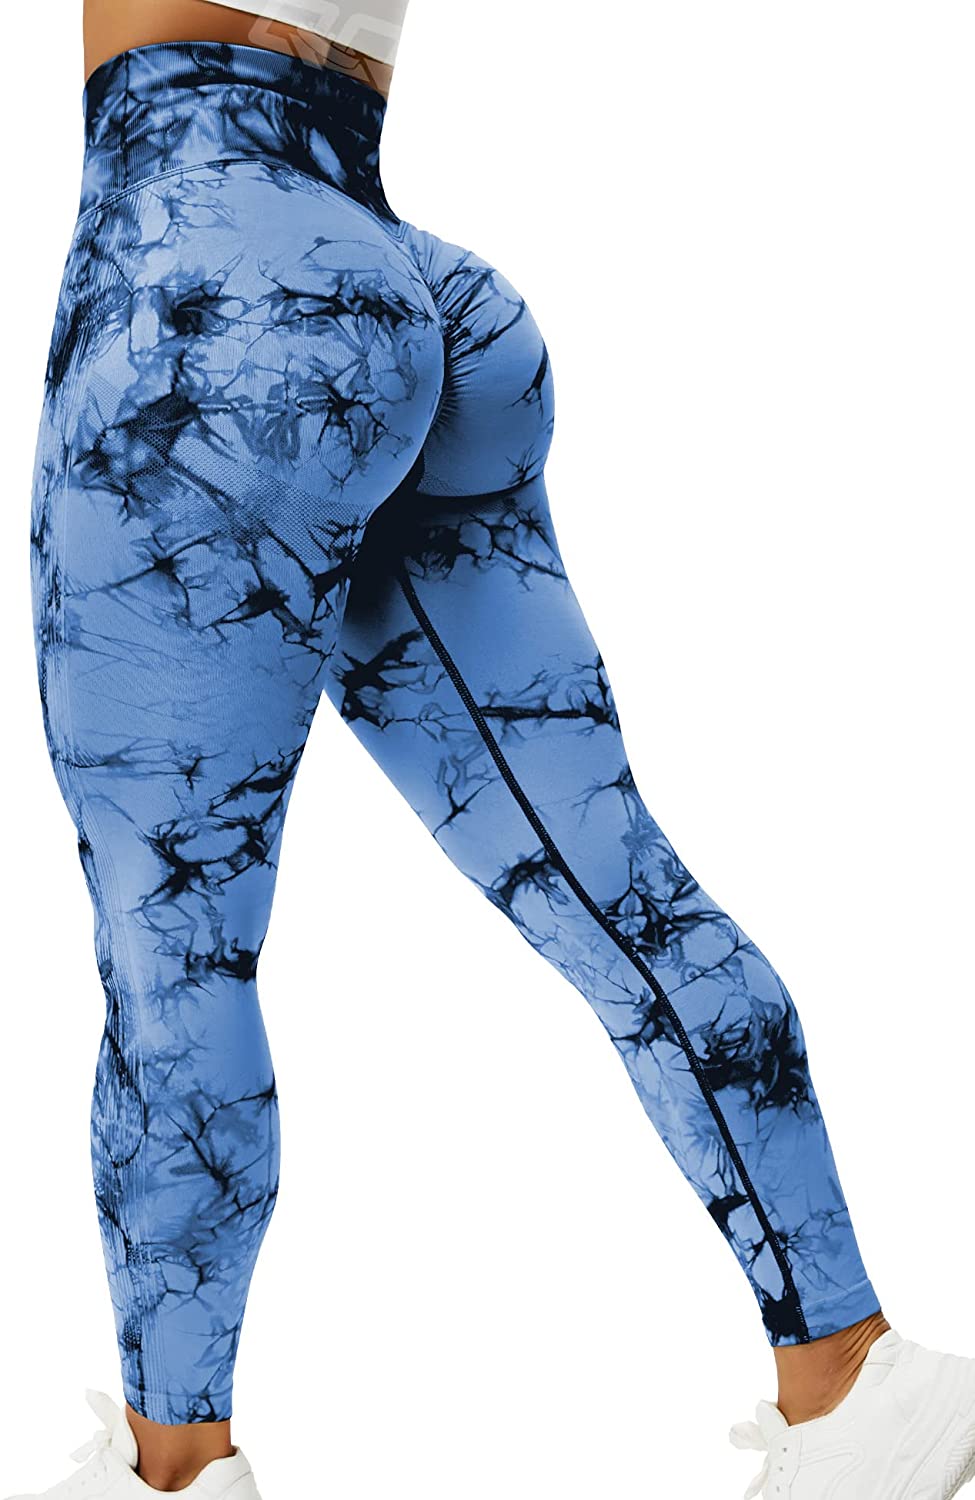 QIPOPIQ Clearance Women's Pants Bubble Hip Lifting Exercise Fitness Running  High Waist Yoga Leggings 